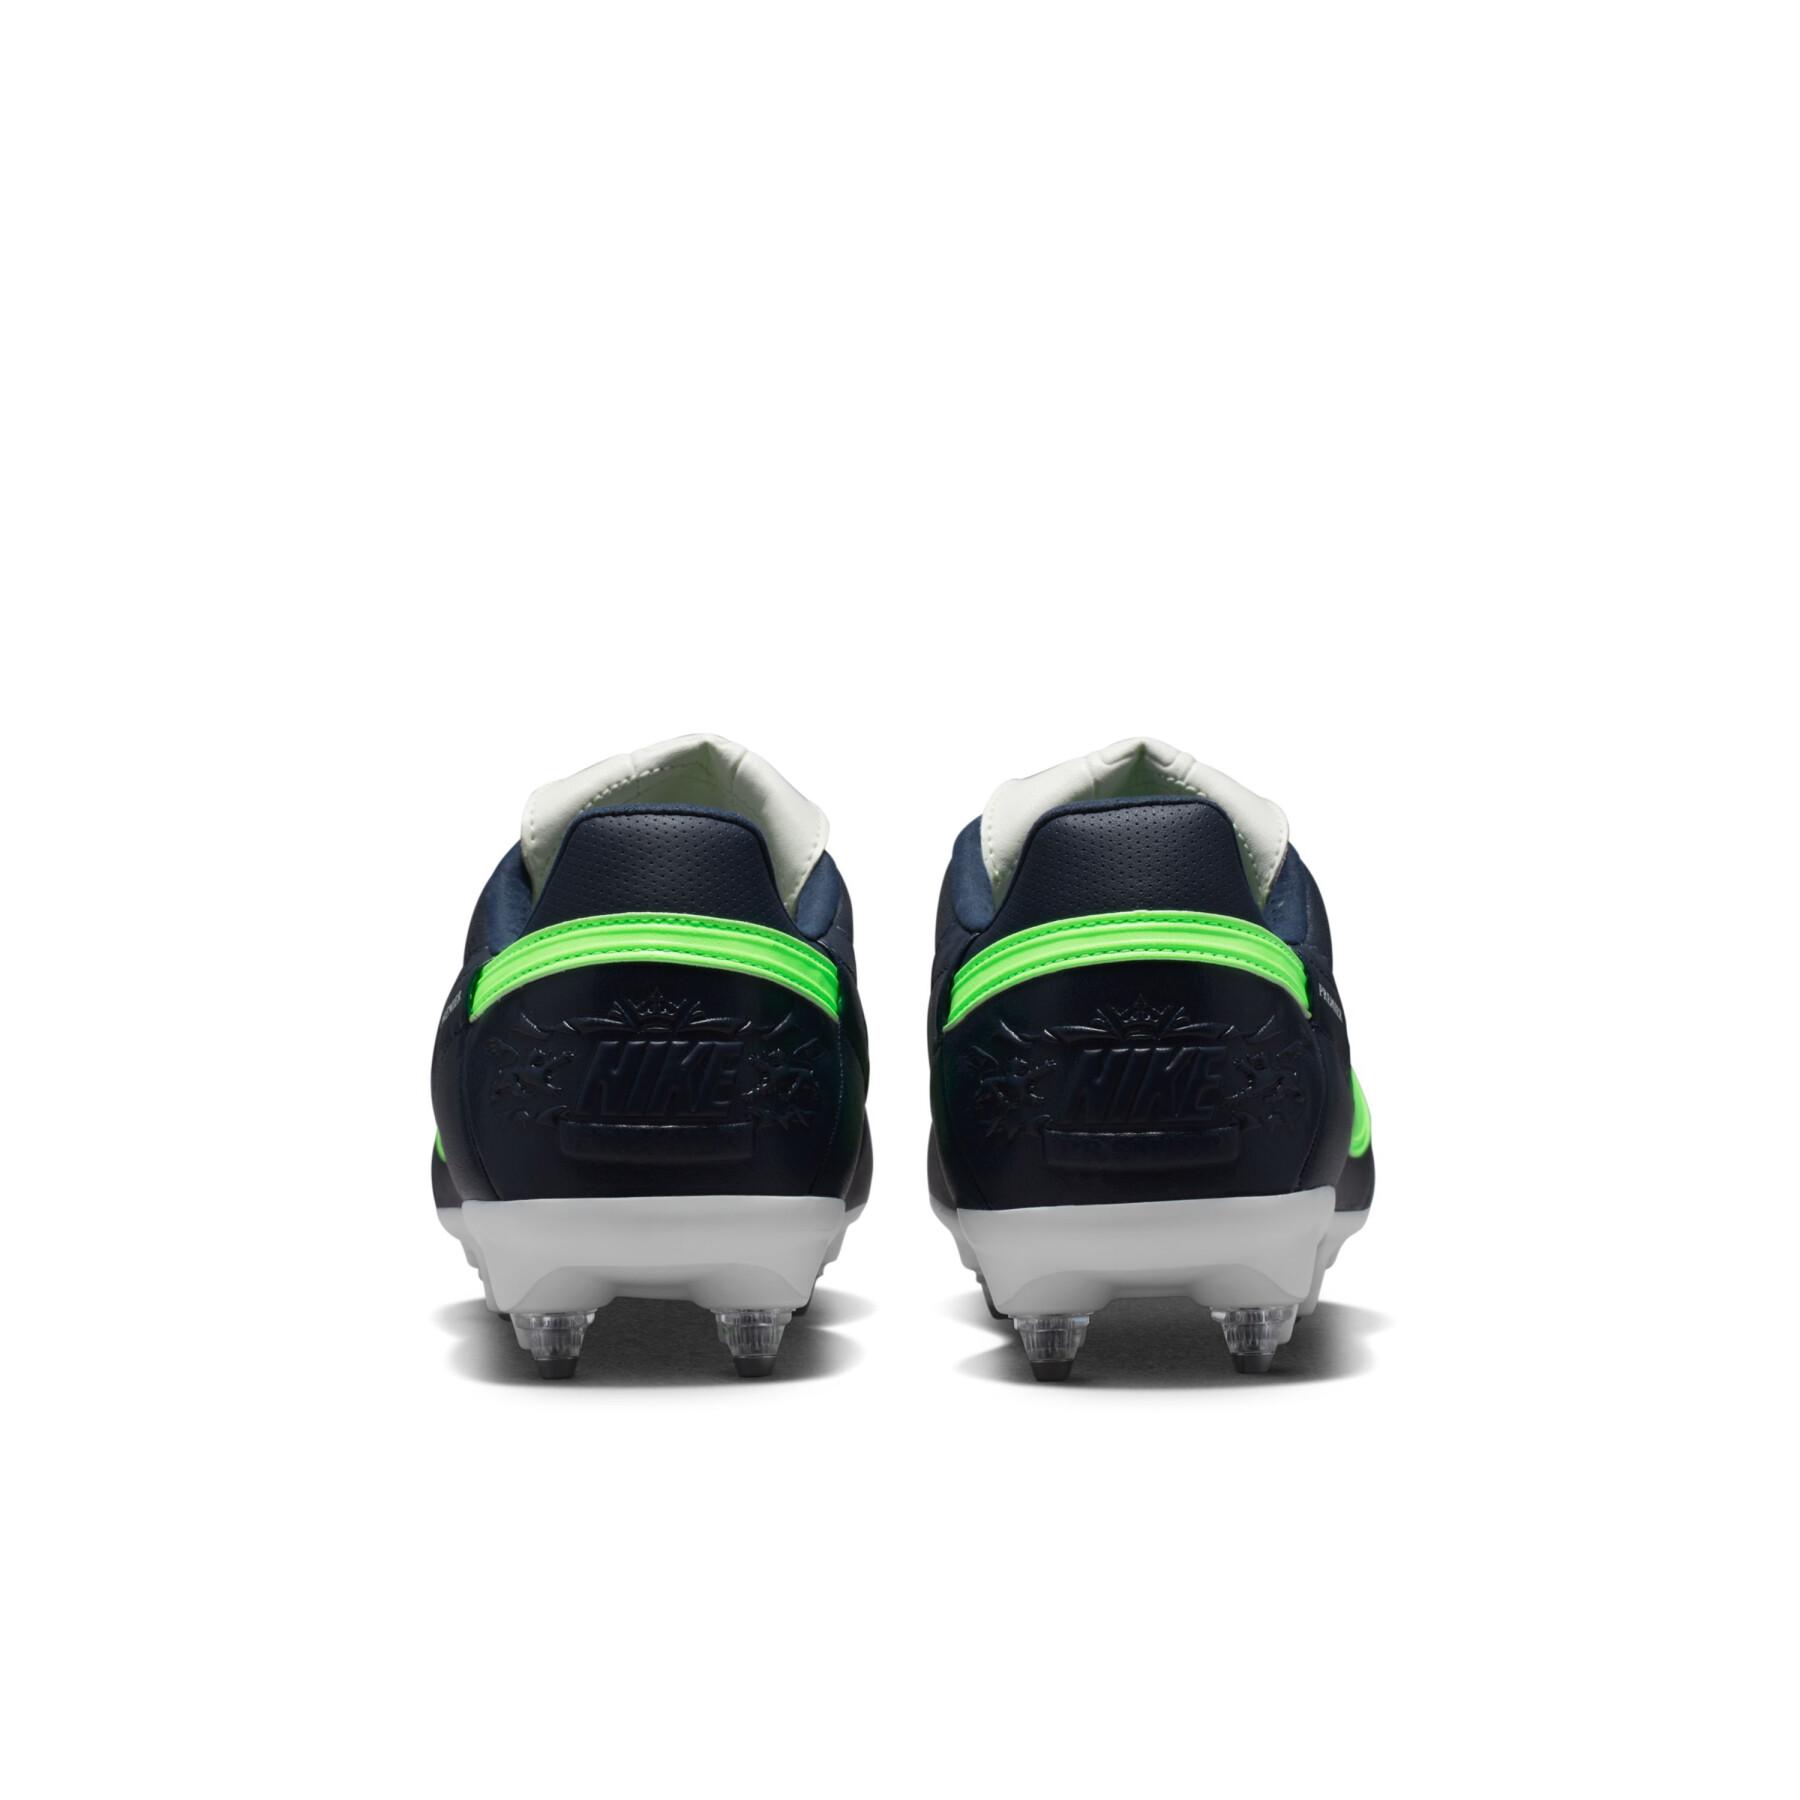 Chaussures de football Nike Premier 3 SG-Pro